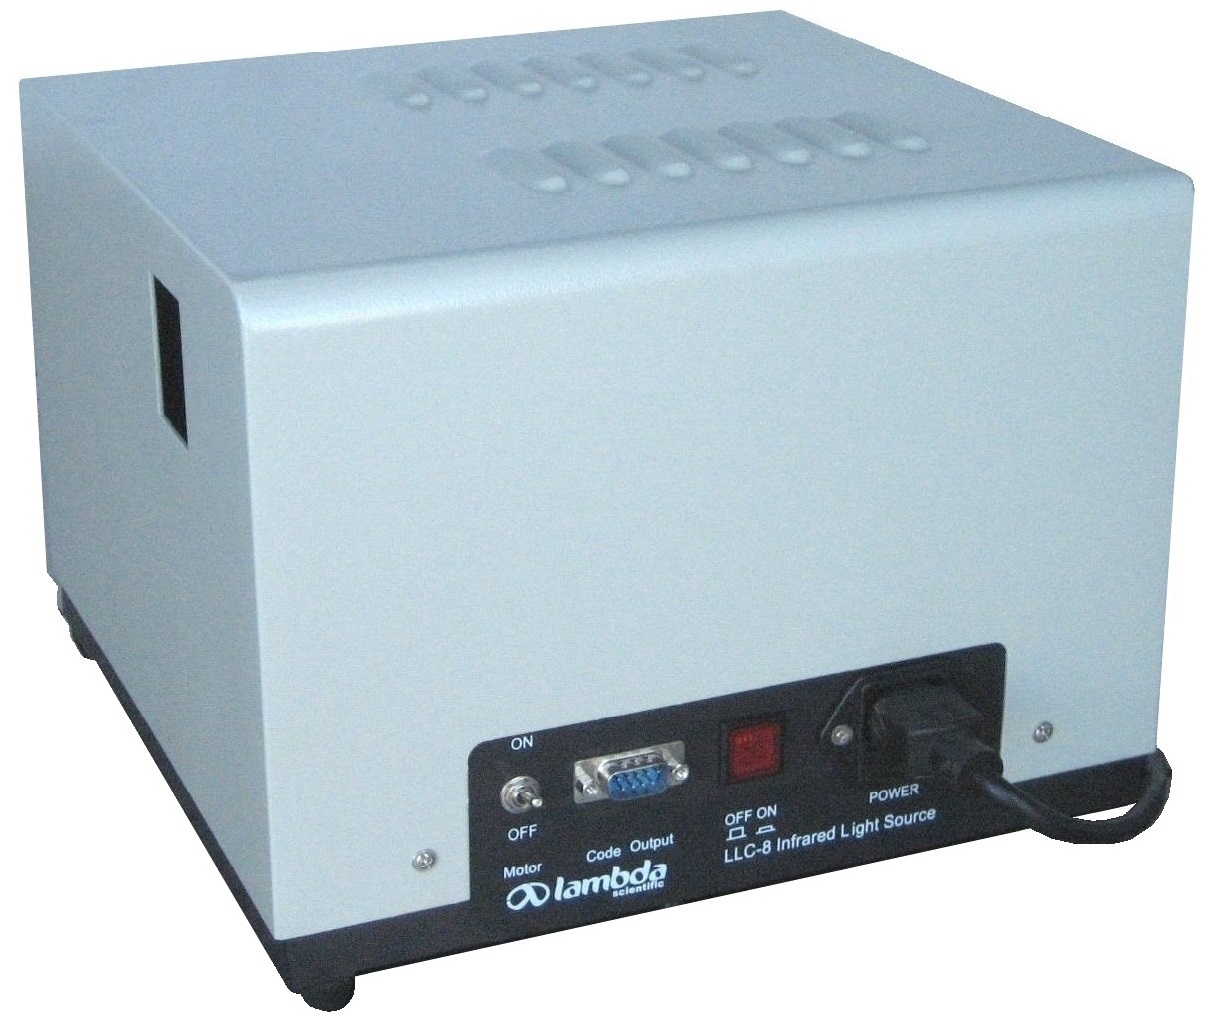 LLC-8 Infrared Light Source